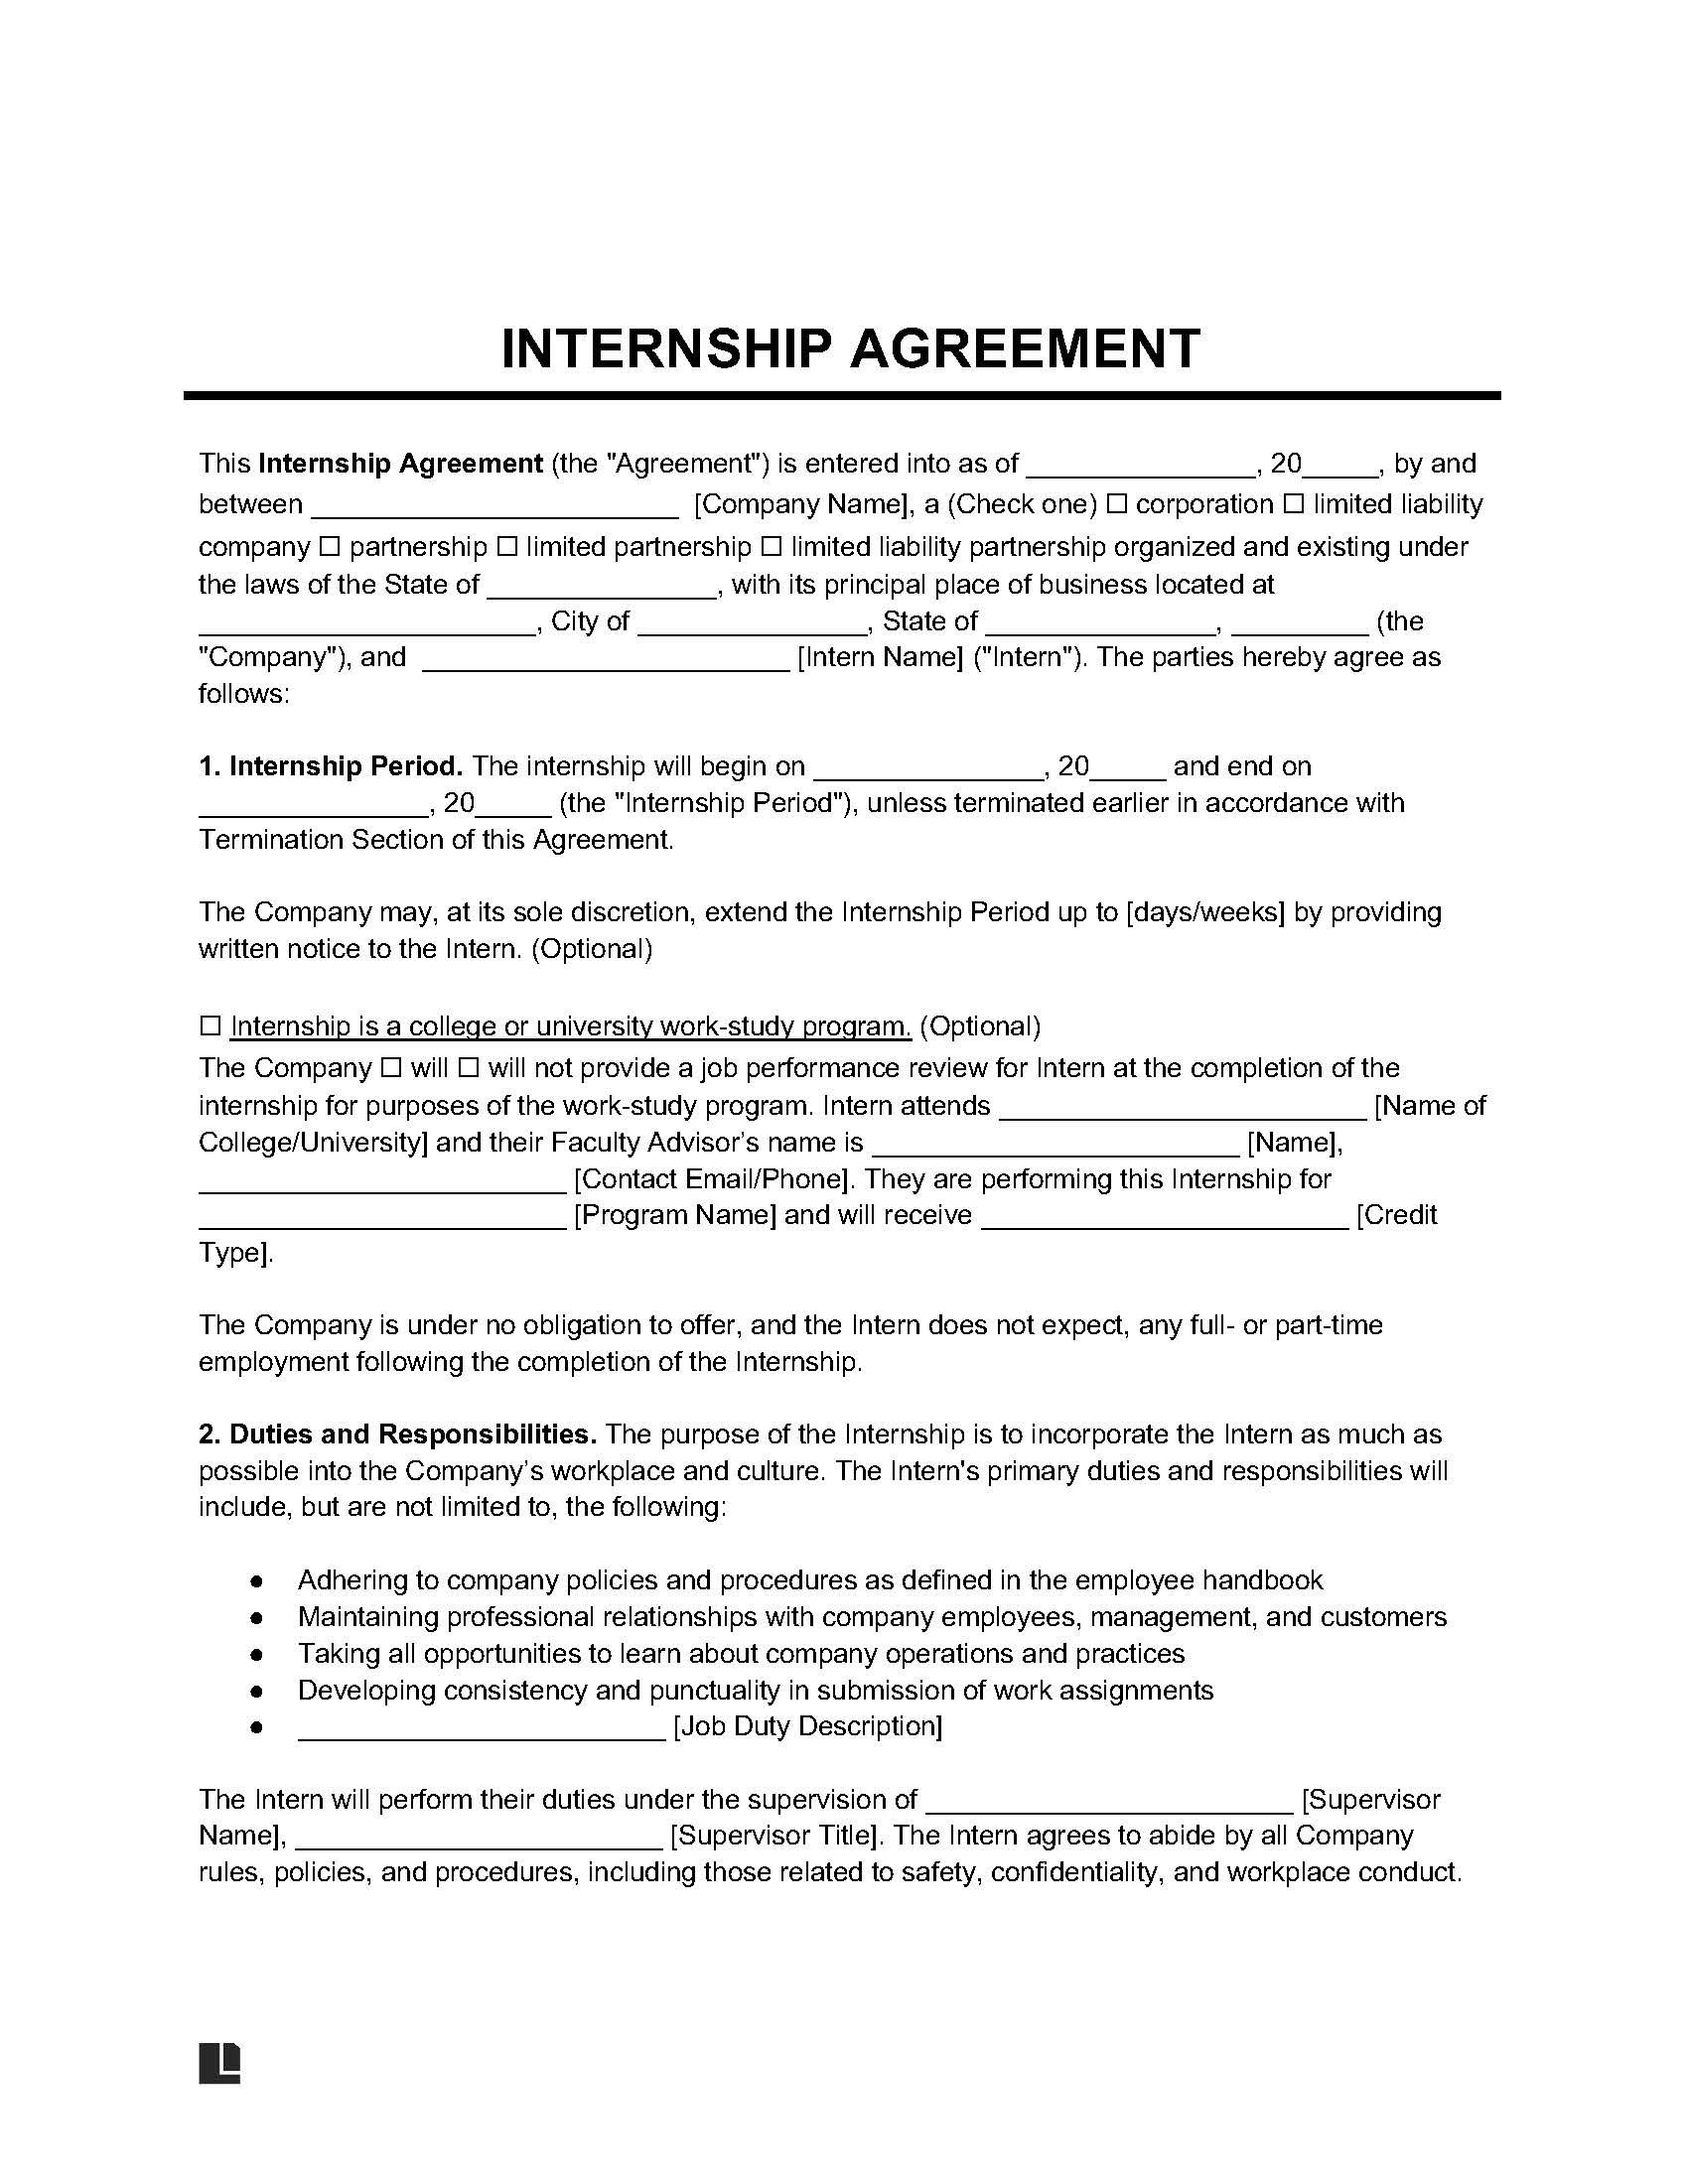 Internship Agreement Sample